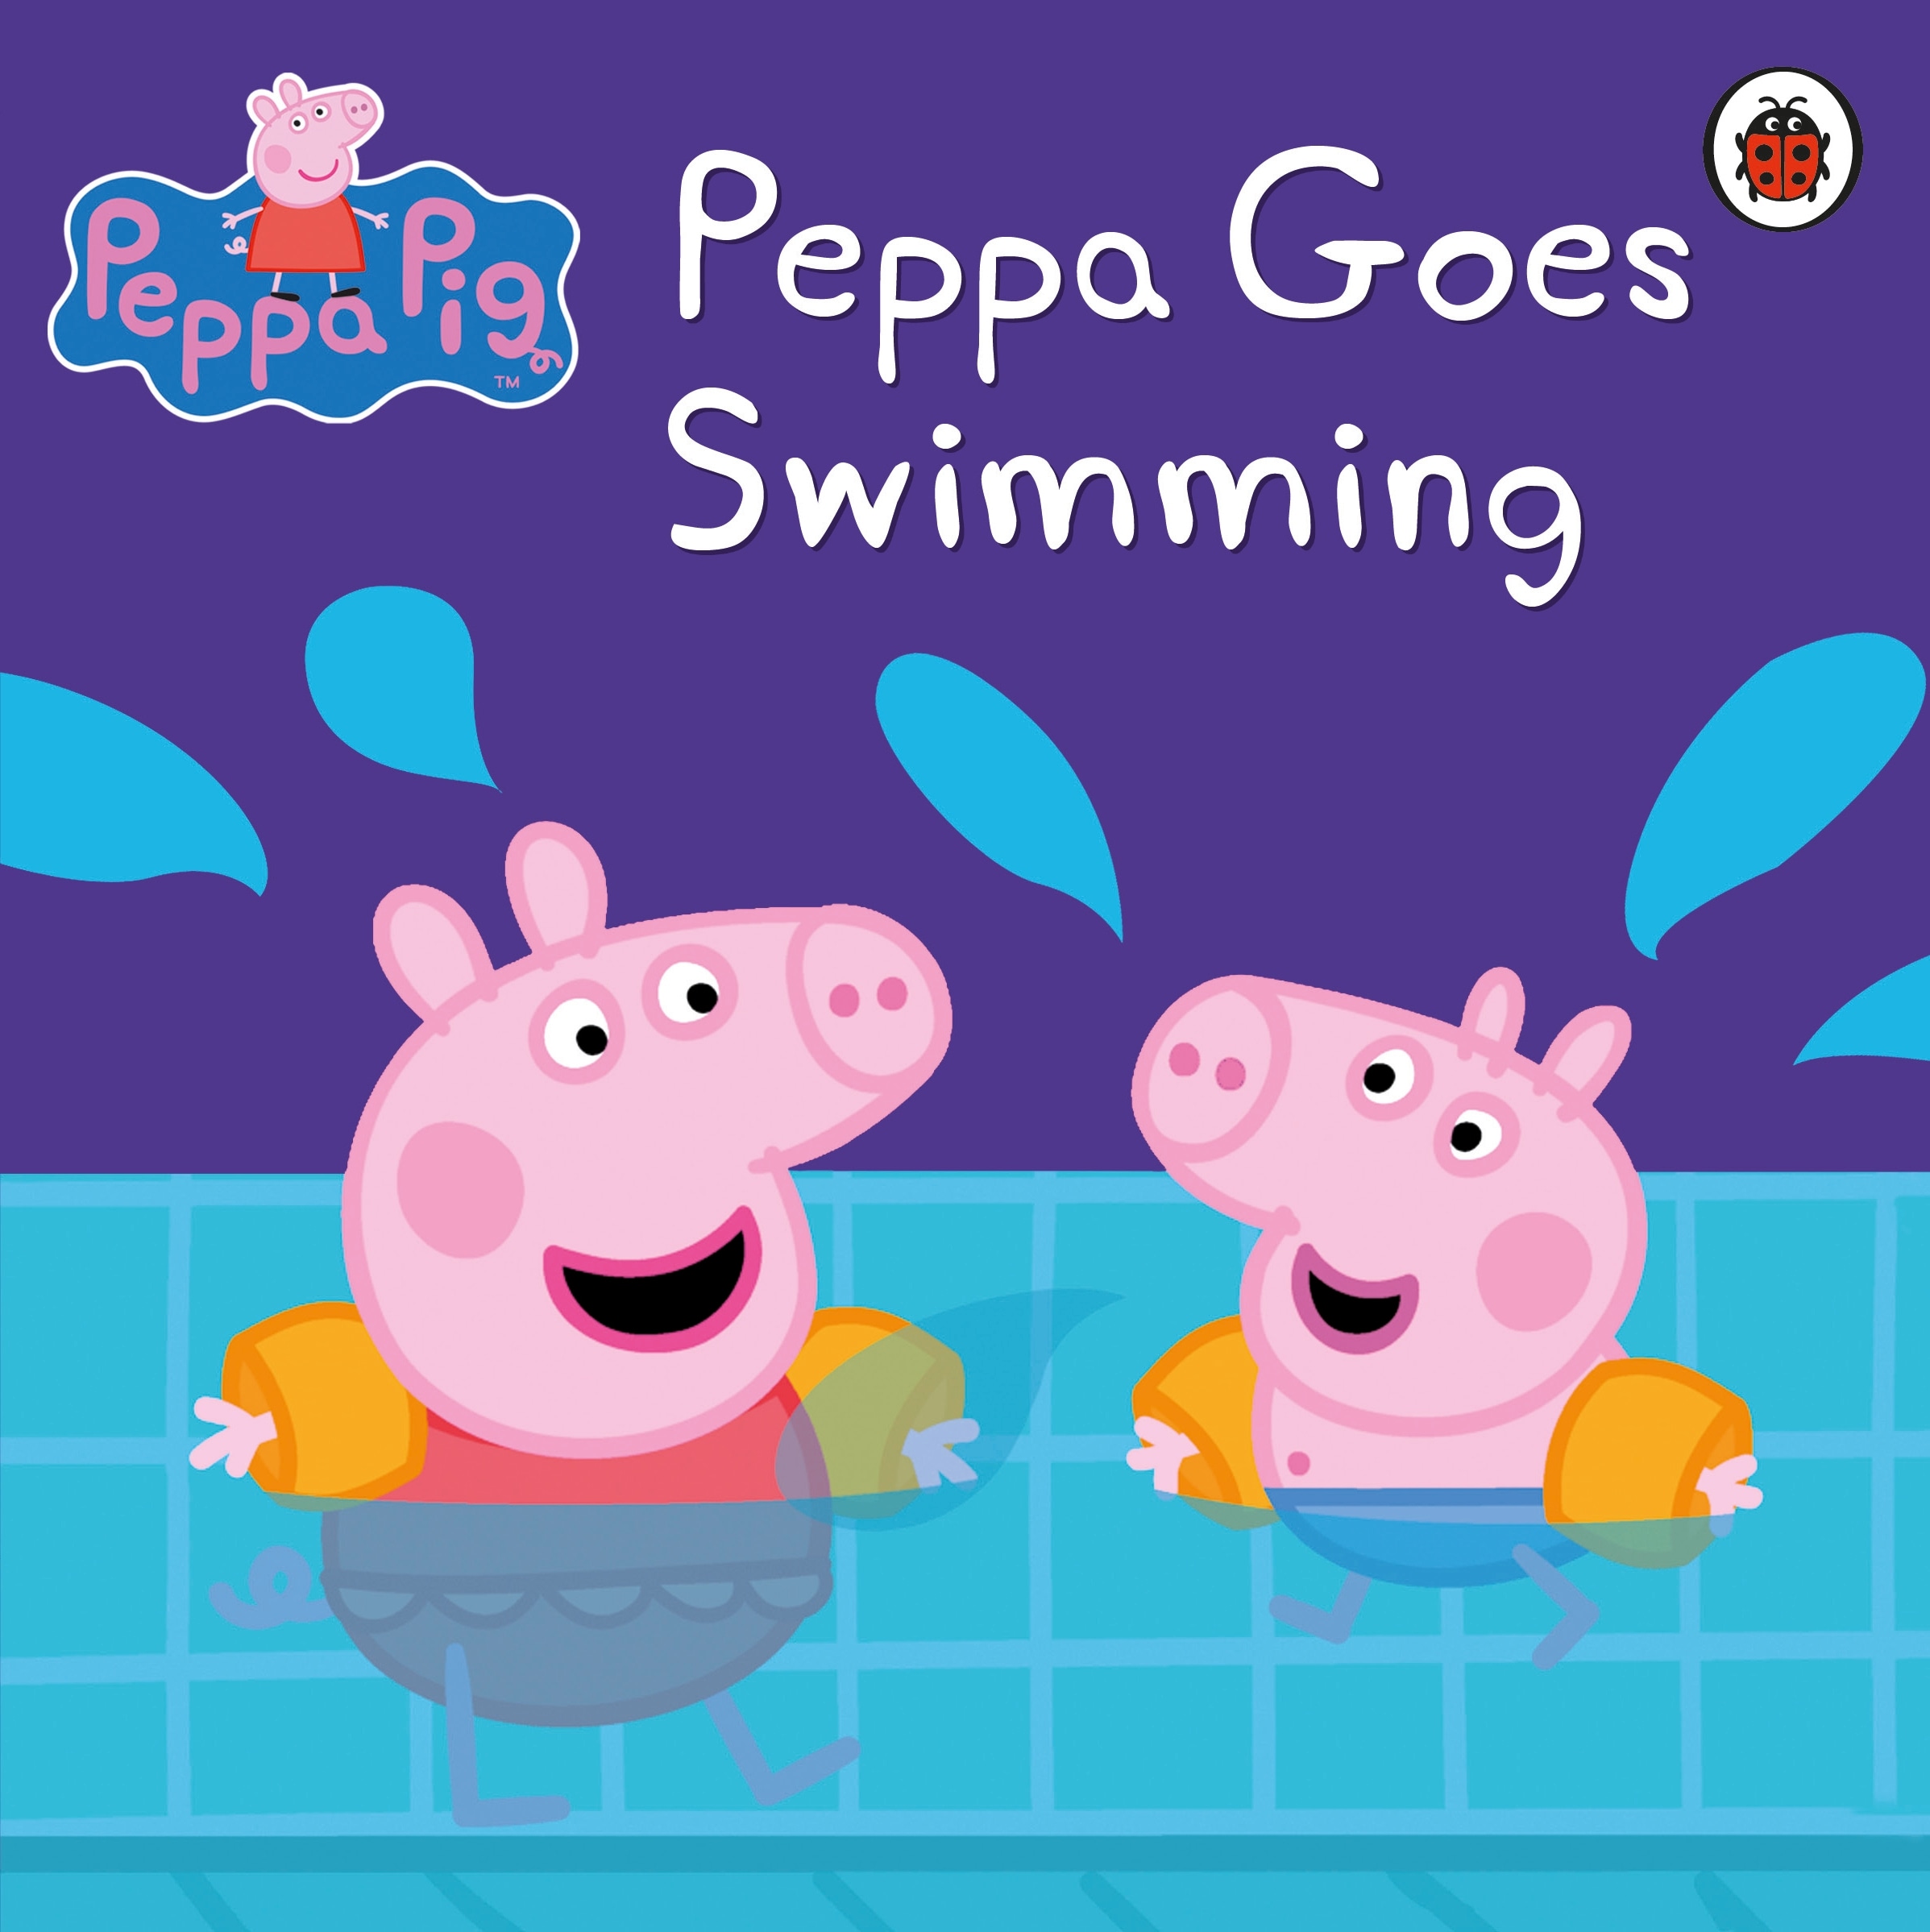 Book “Peppa Pig: Peppa Goes Swimming” by Peppa Pig — May 7, 2009